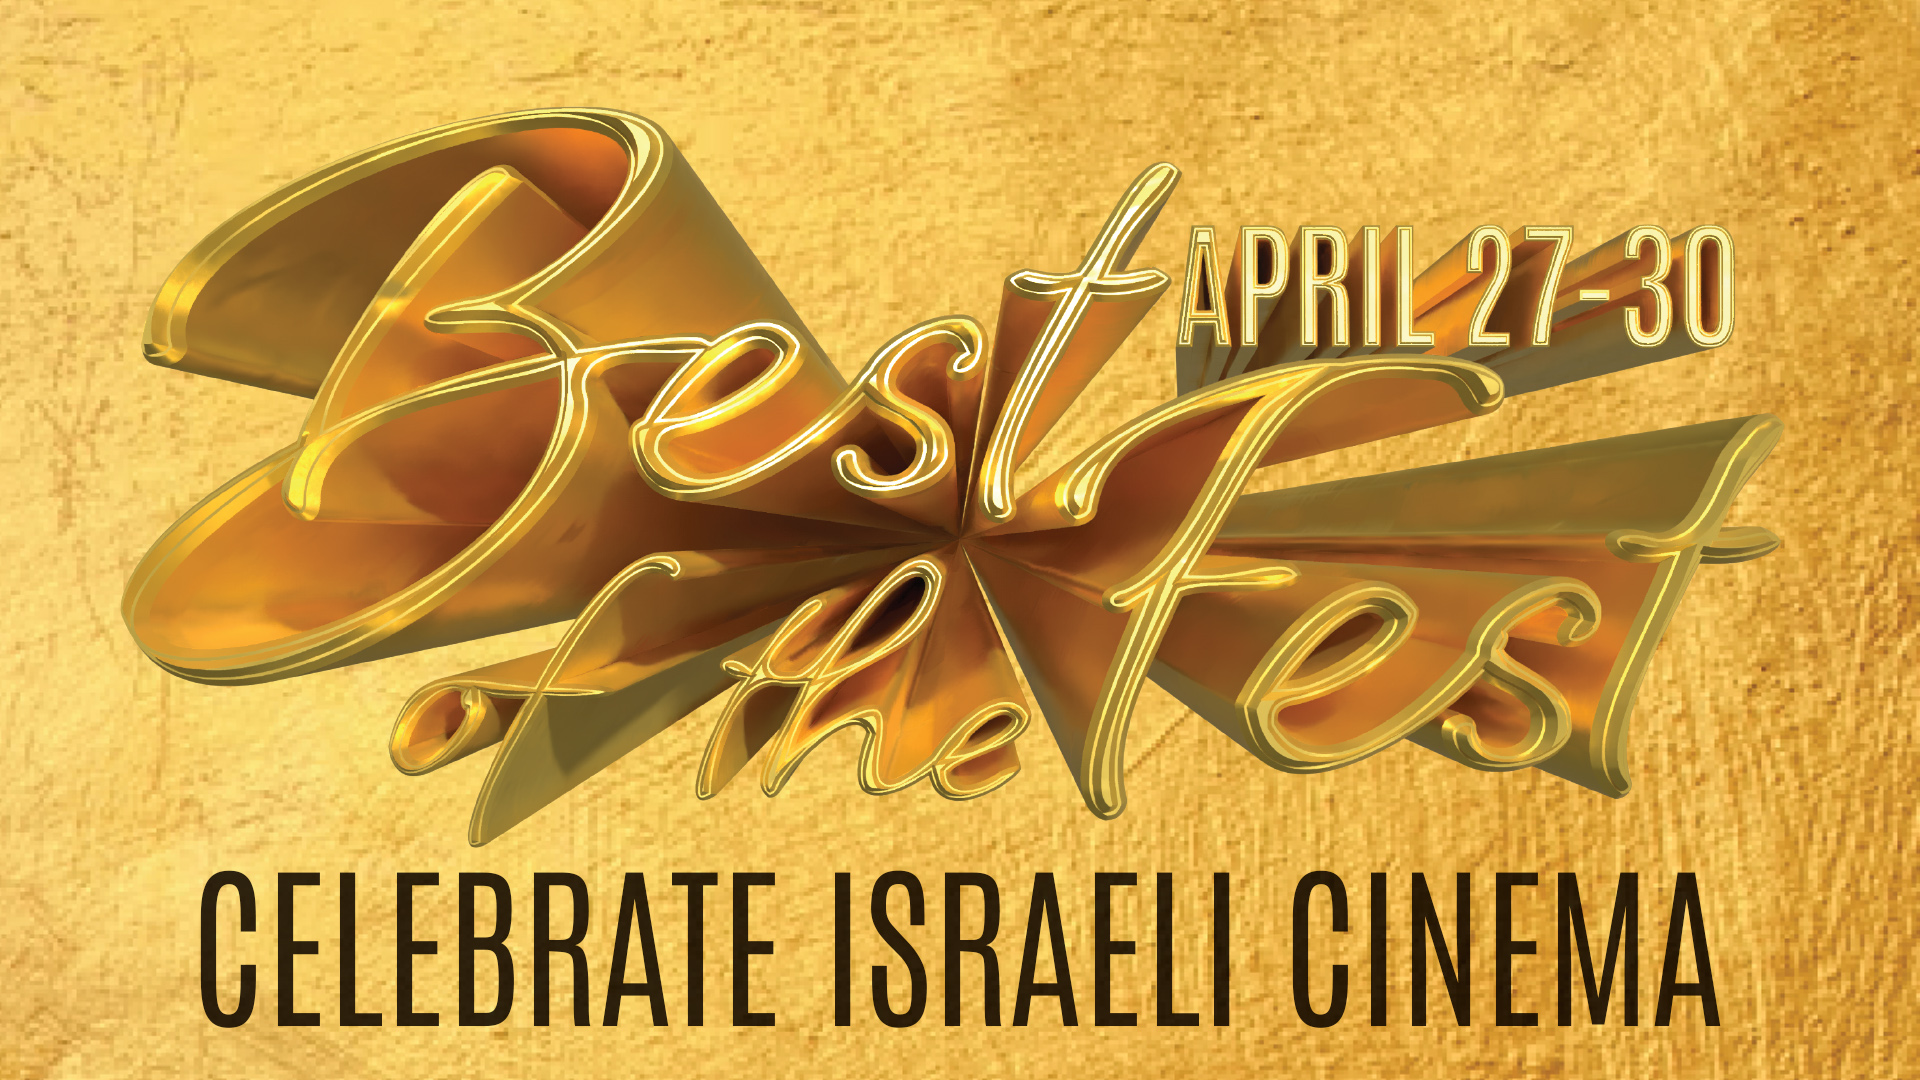 Best of the Fest, April 27-30, Celebrate Israeli Cinema